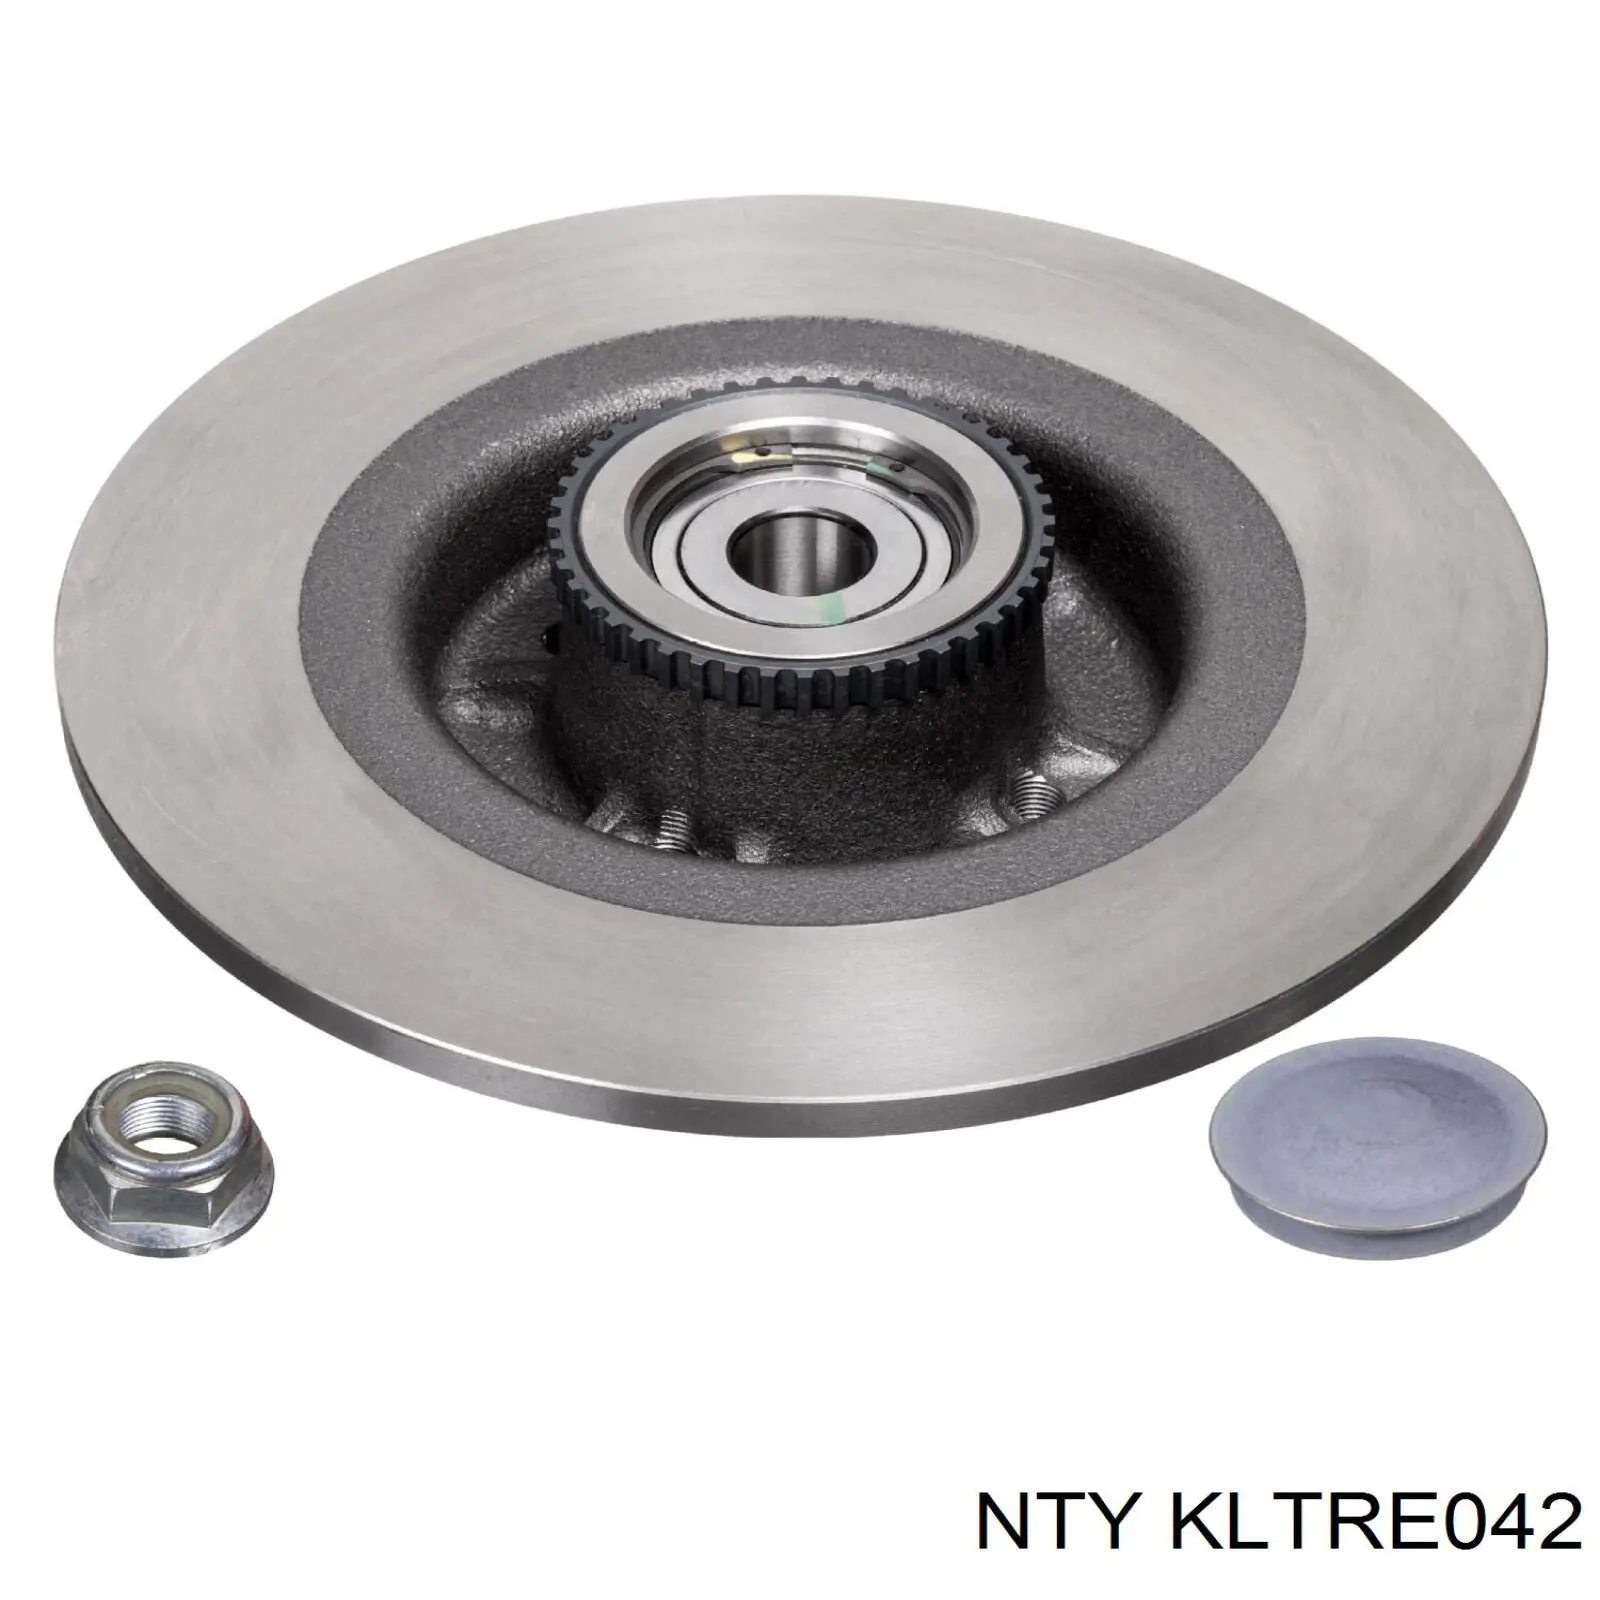 KLT-RE-042 NTY тормозные диски